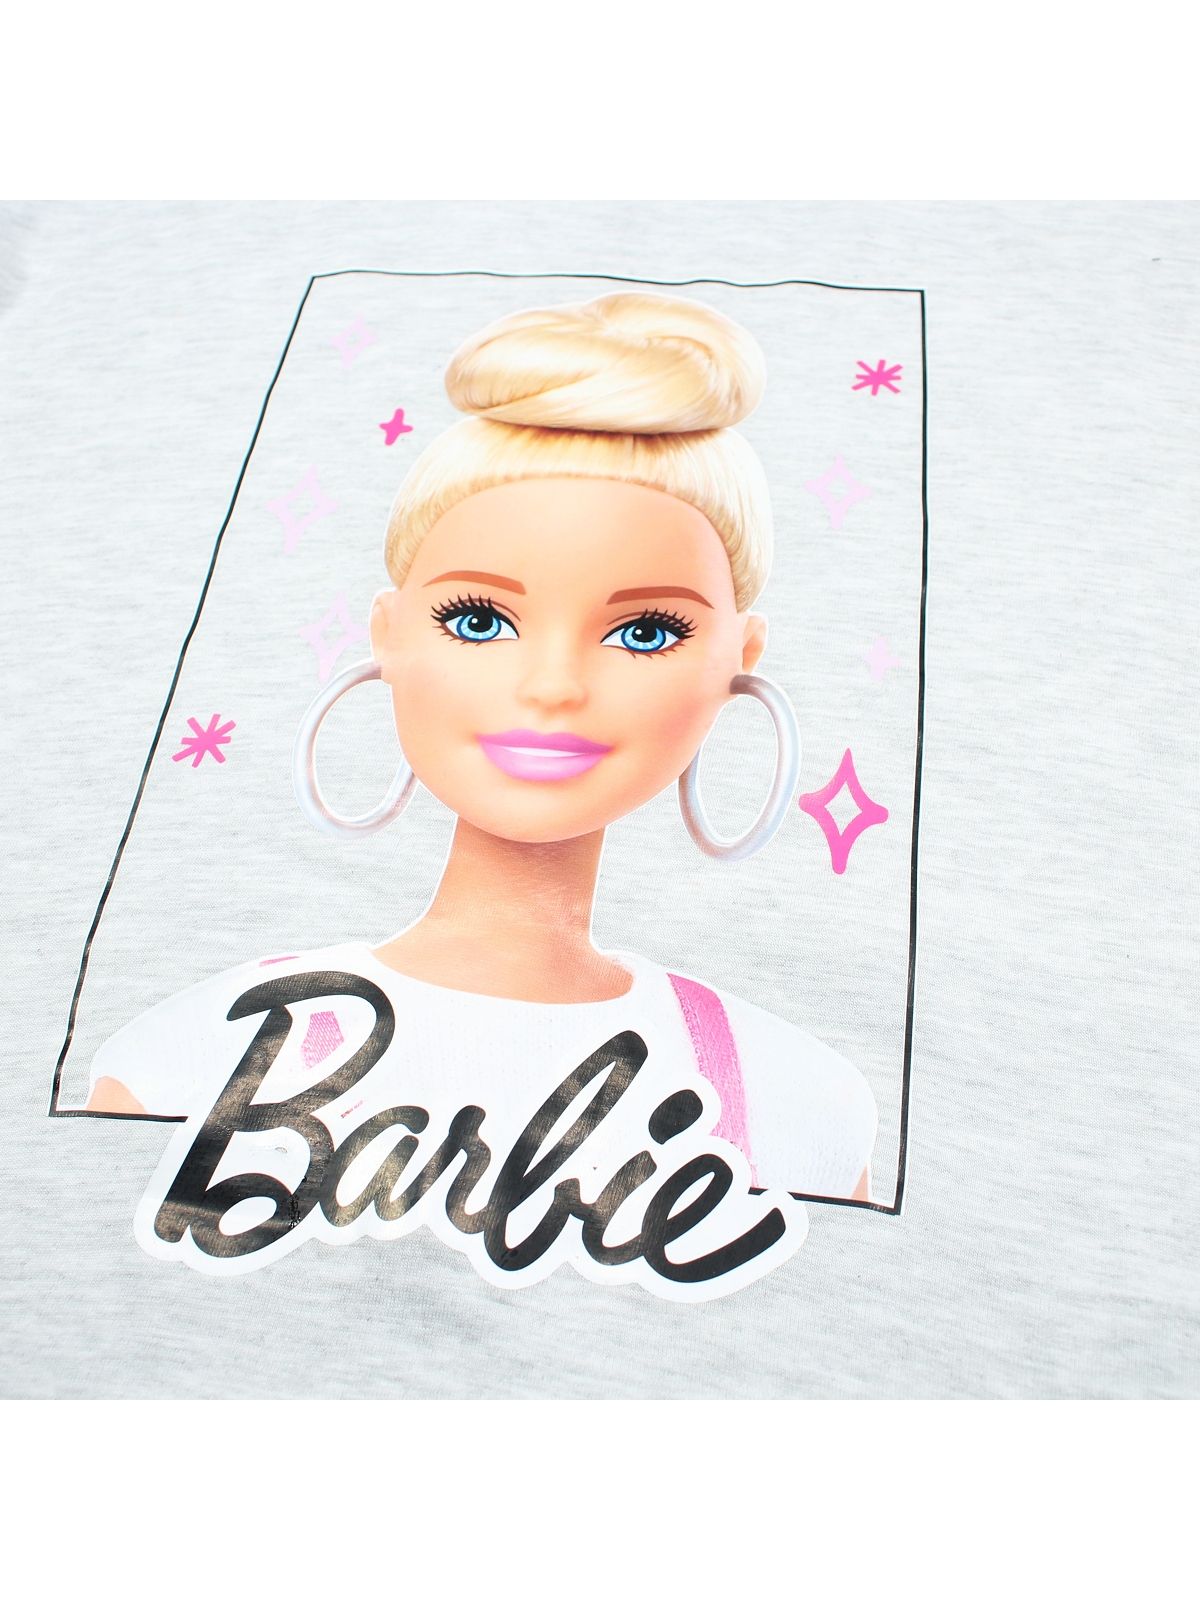 Barbie-set.